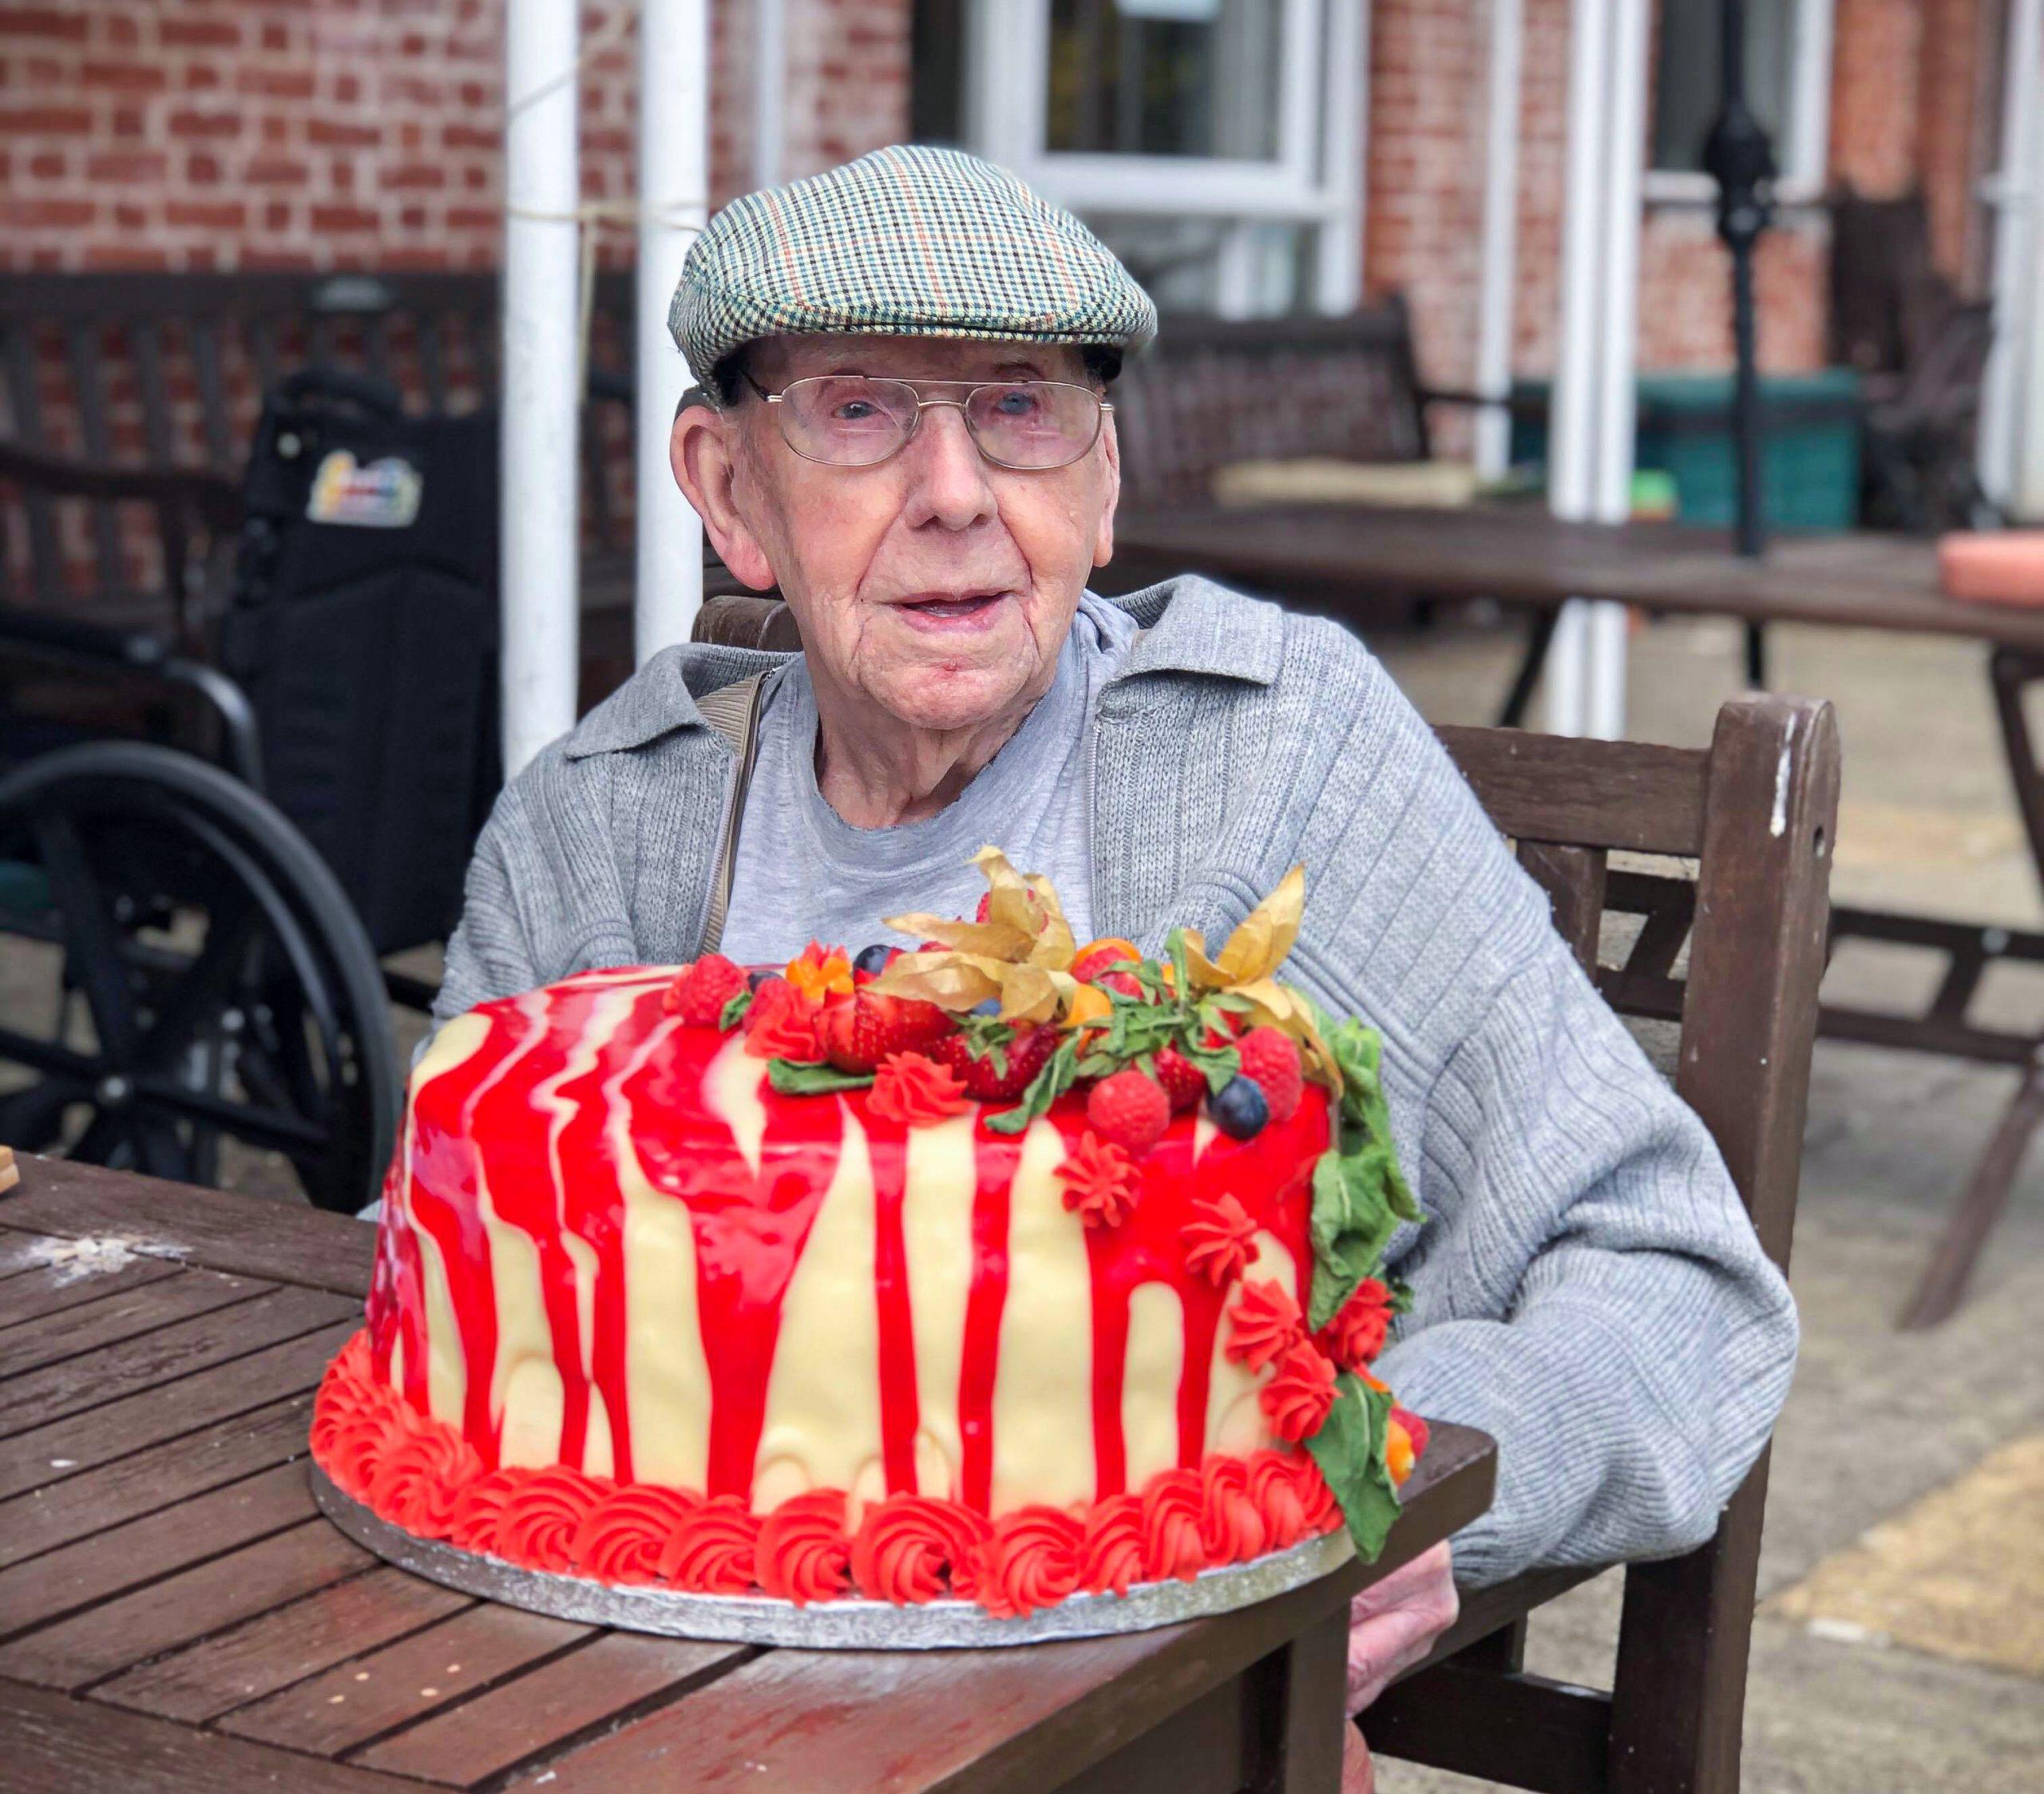 Alton Resident Bill during his 100th Birthday celebrations